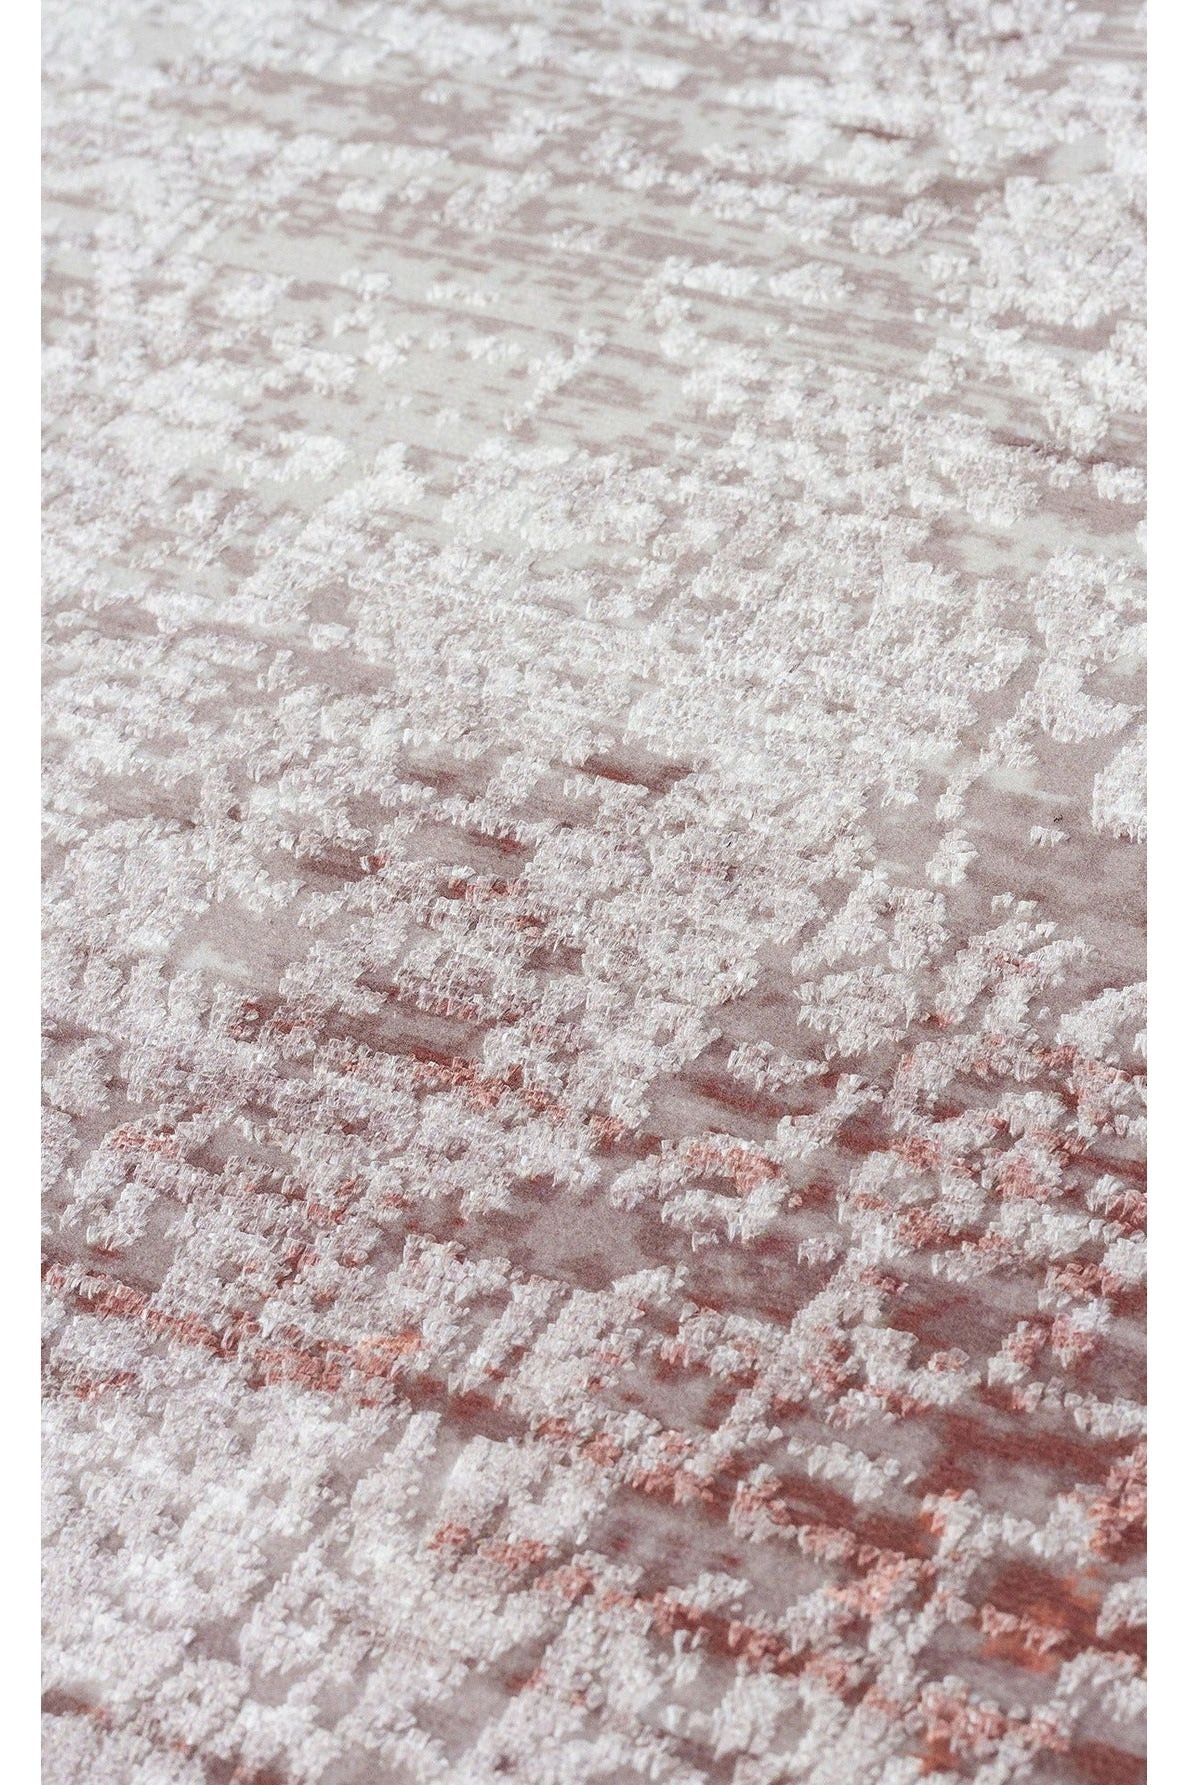 #Turkish_Carpets_Rugs# #Modern_Carpets# #Abrash_Carpets#Cst 01 Terra